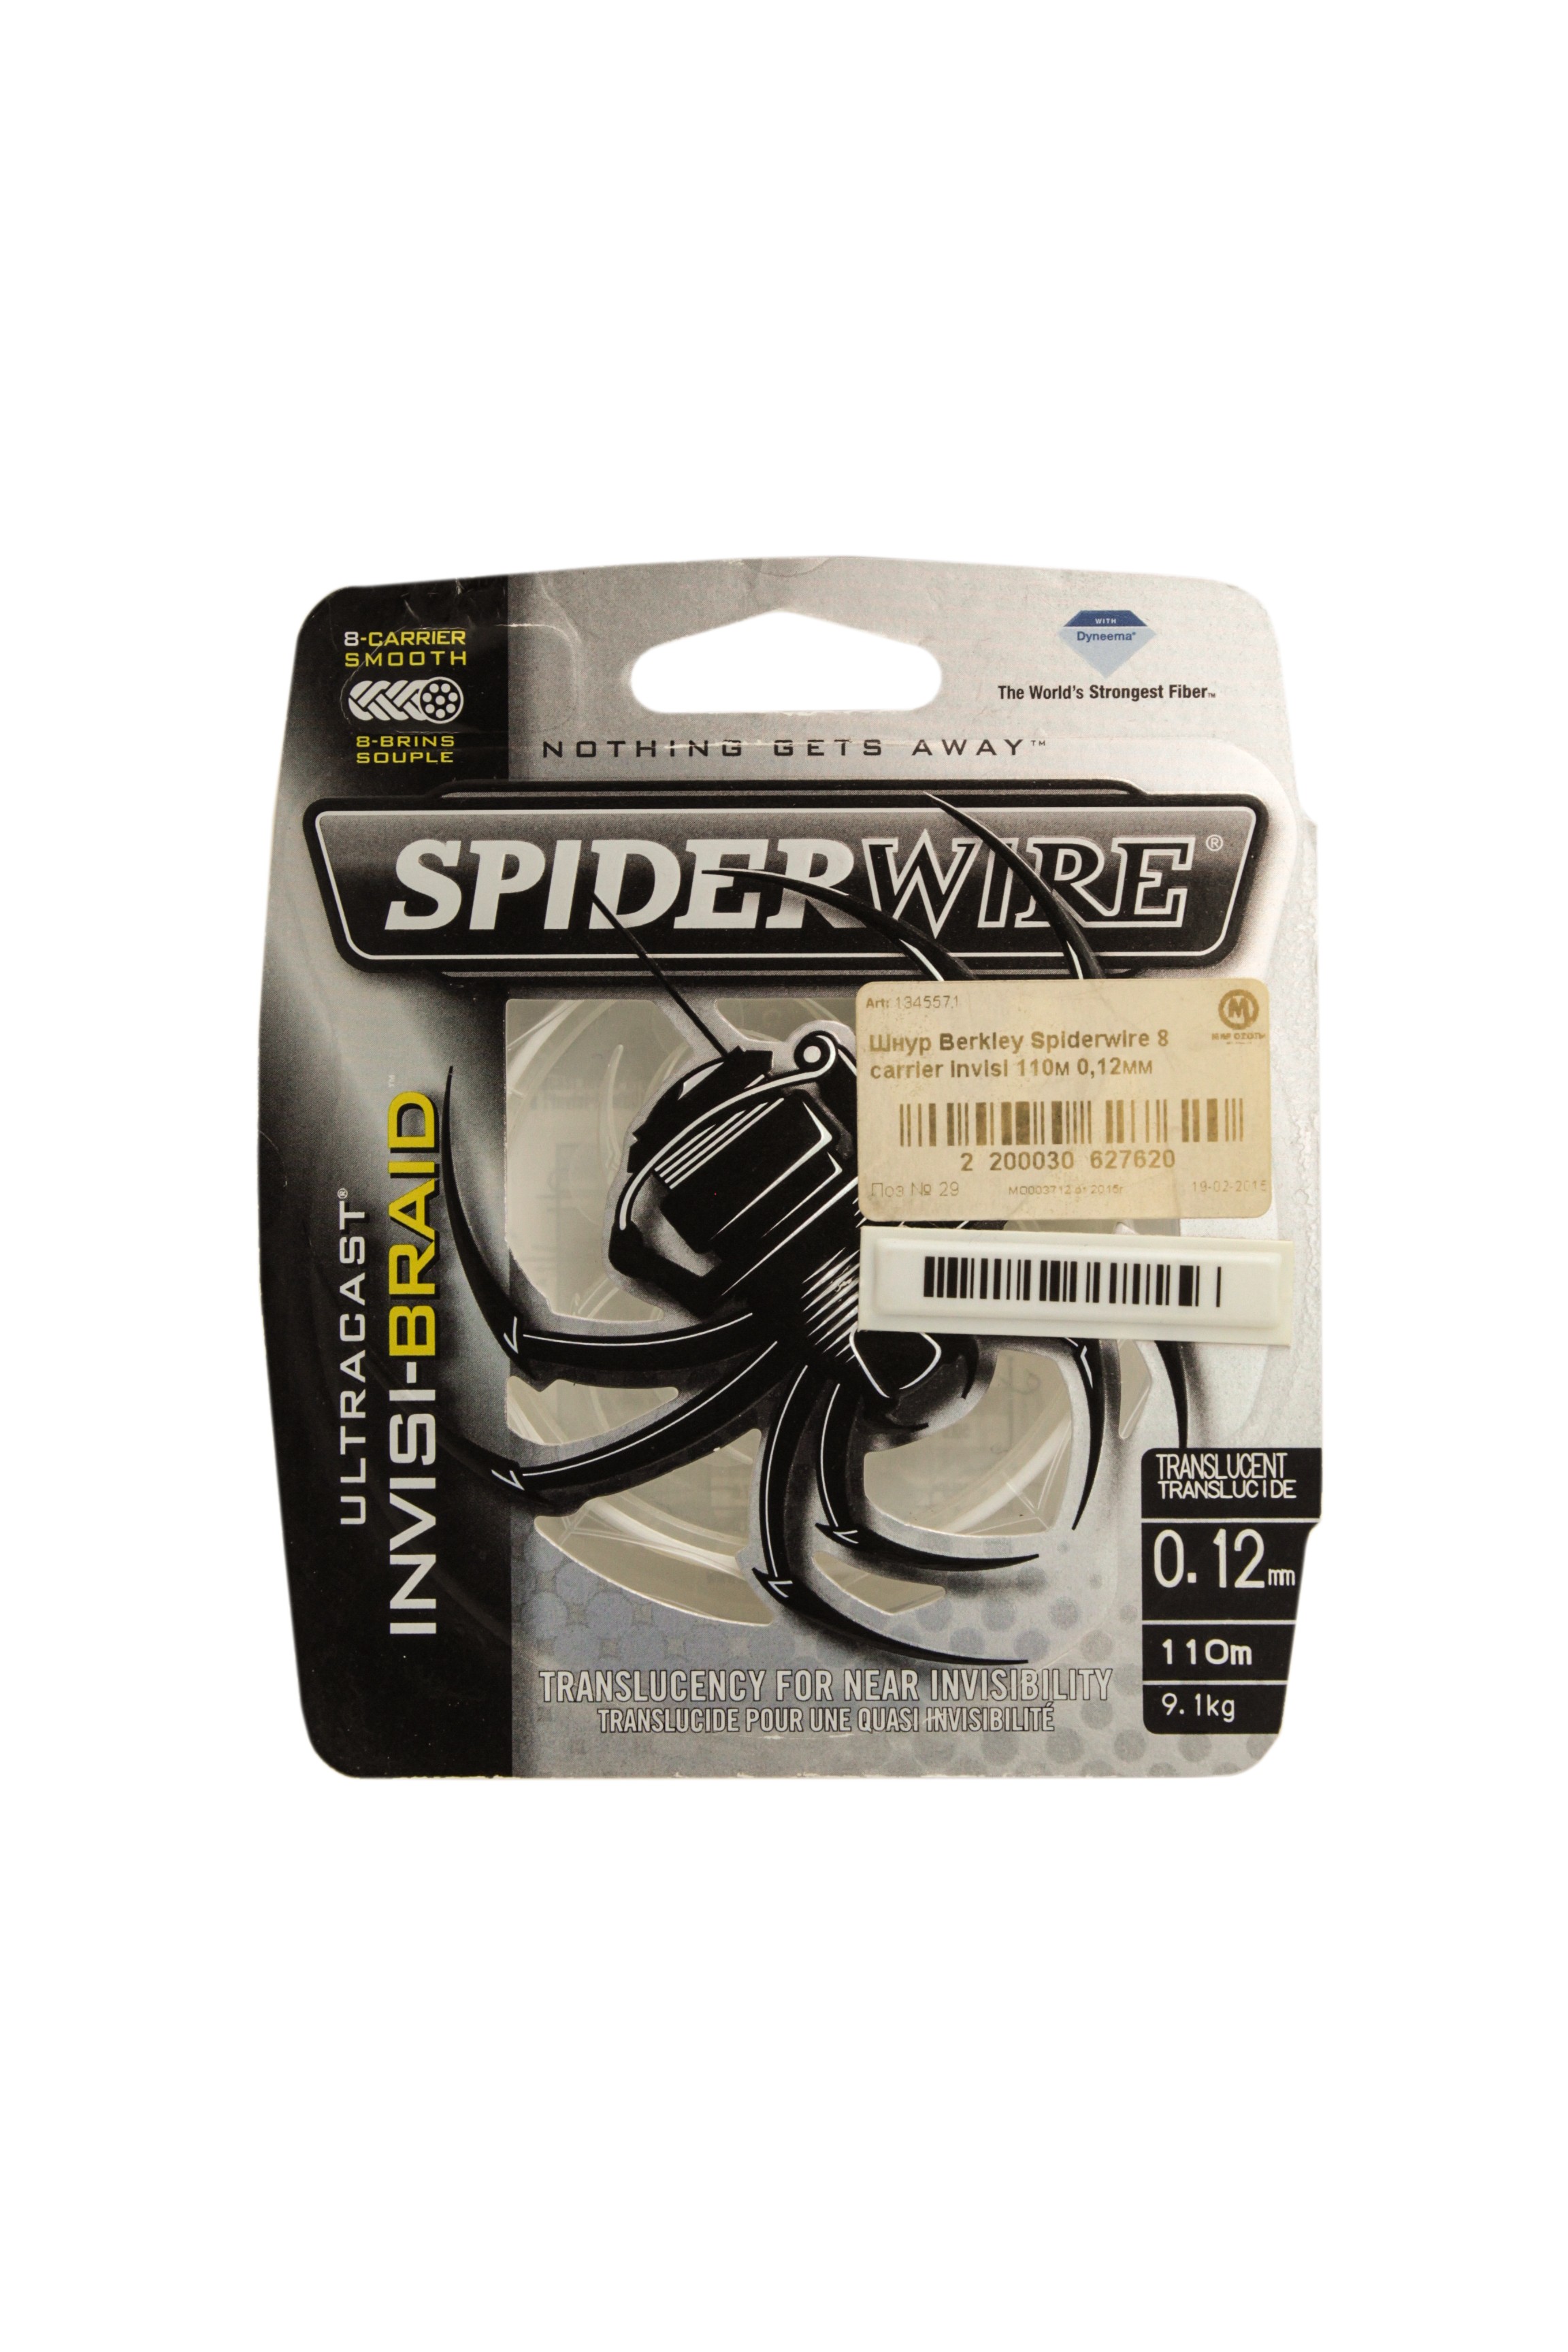 Шнур Spiderwire 8 carrier invisi 110м 0,12мм - фото 1